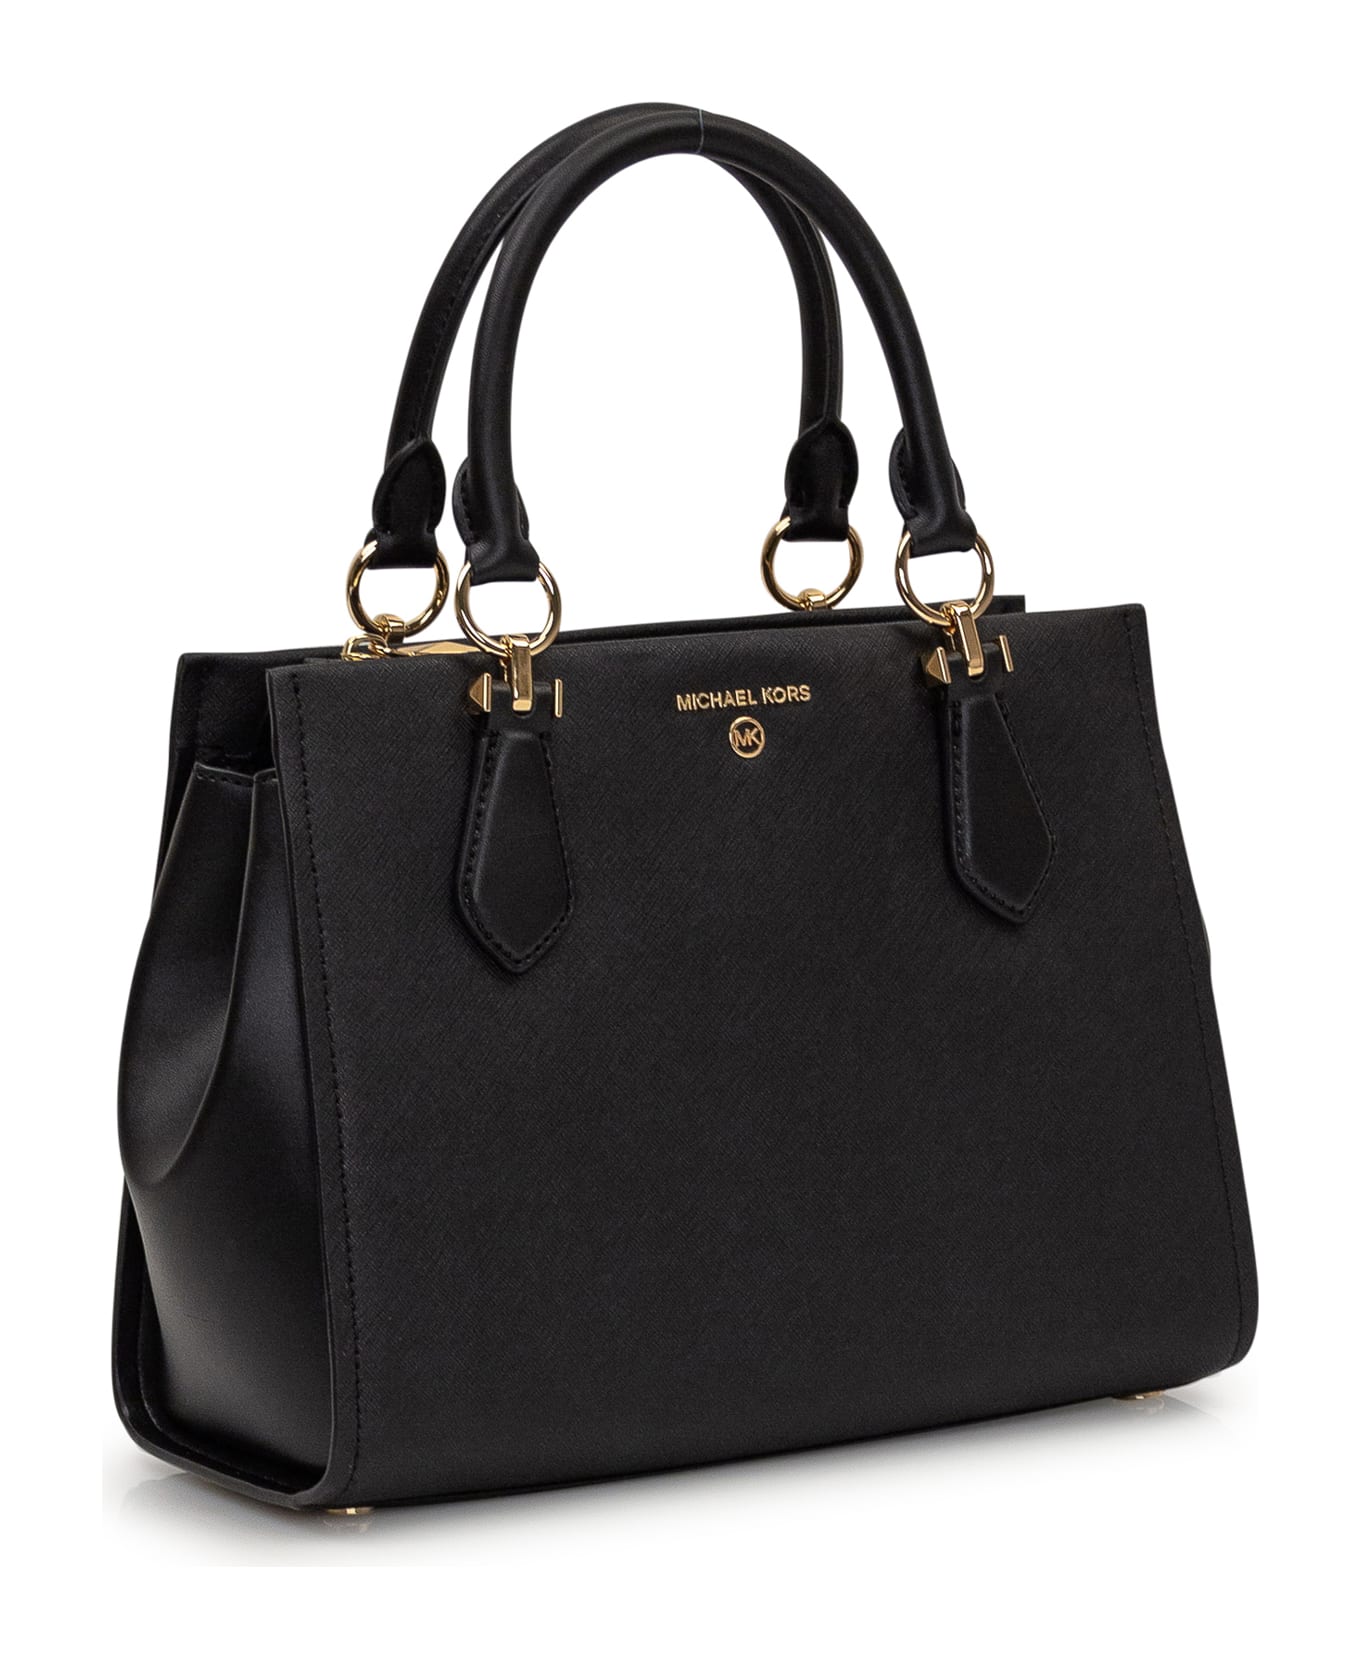 Michael Kors Black Marilyn Leather Bag - Black